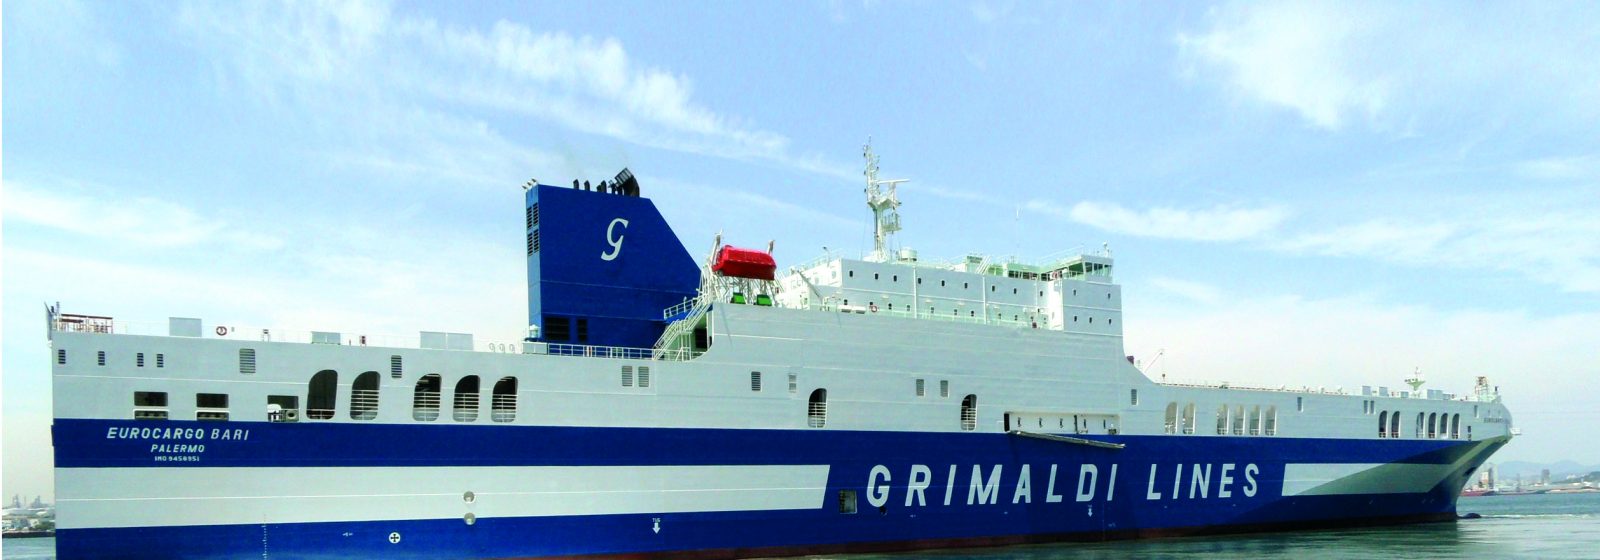 Roroschip 'Eurocargo Bari' van de Italiaanse rederij Grimaldi